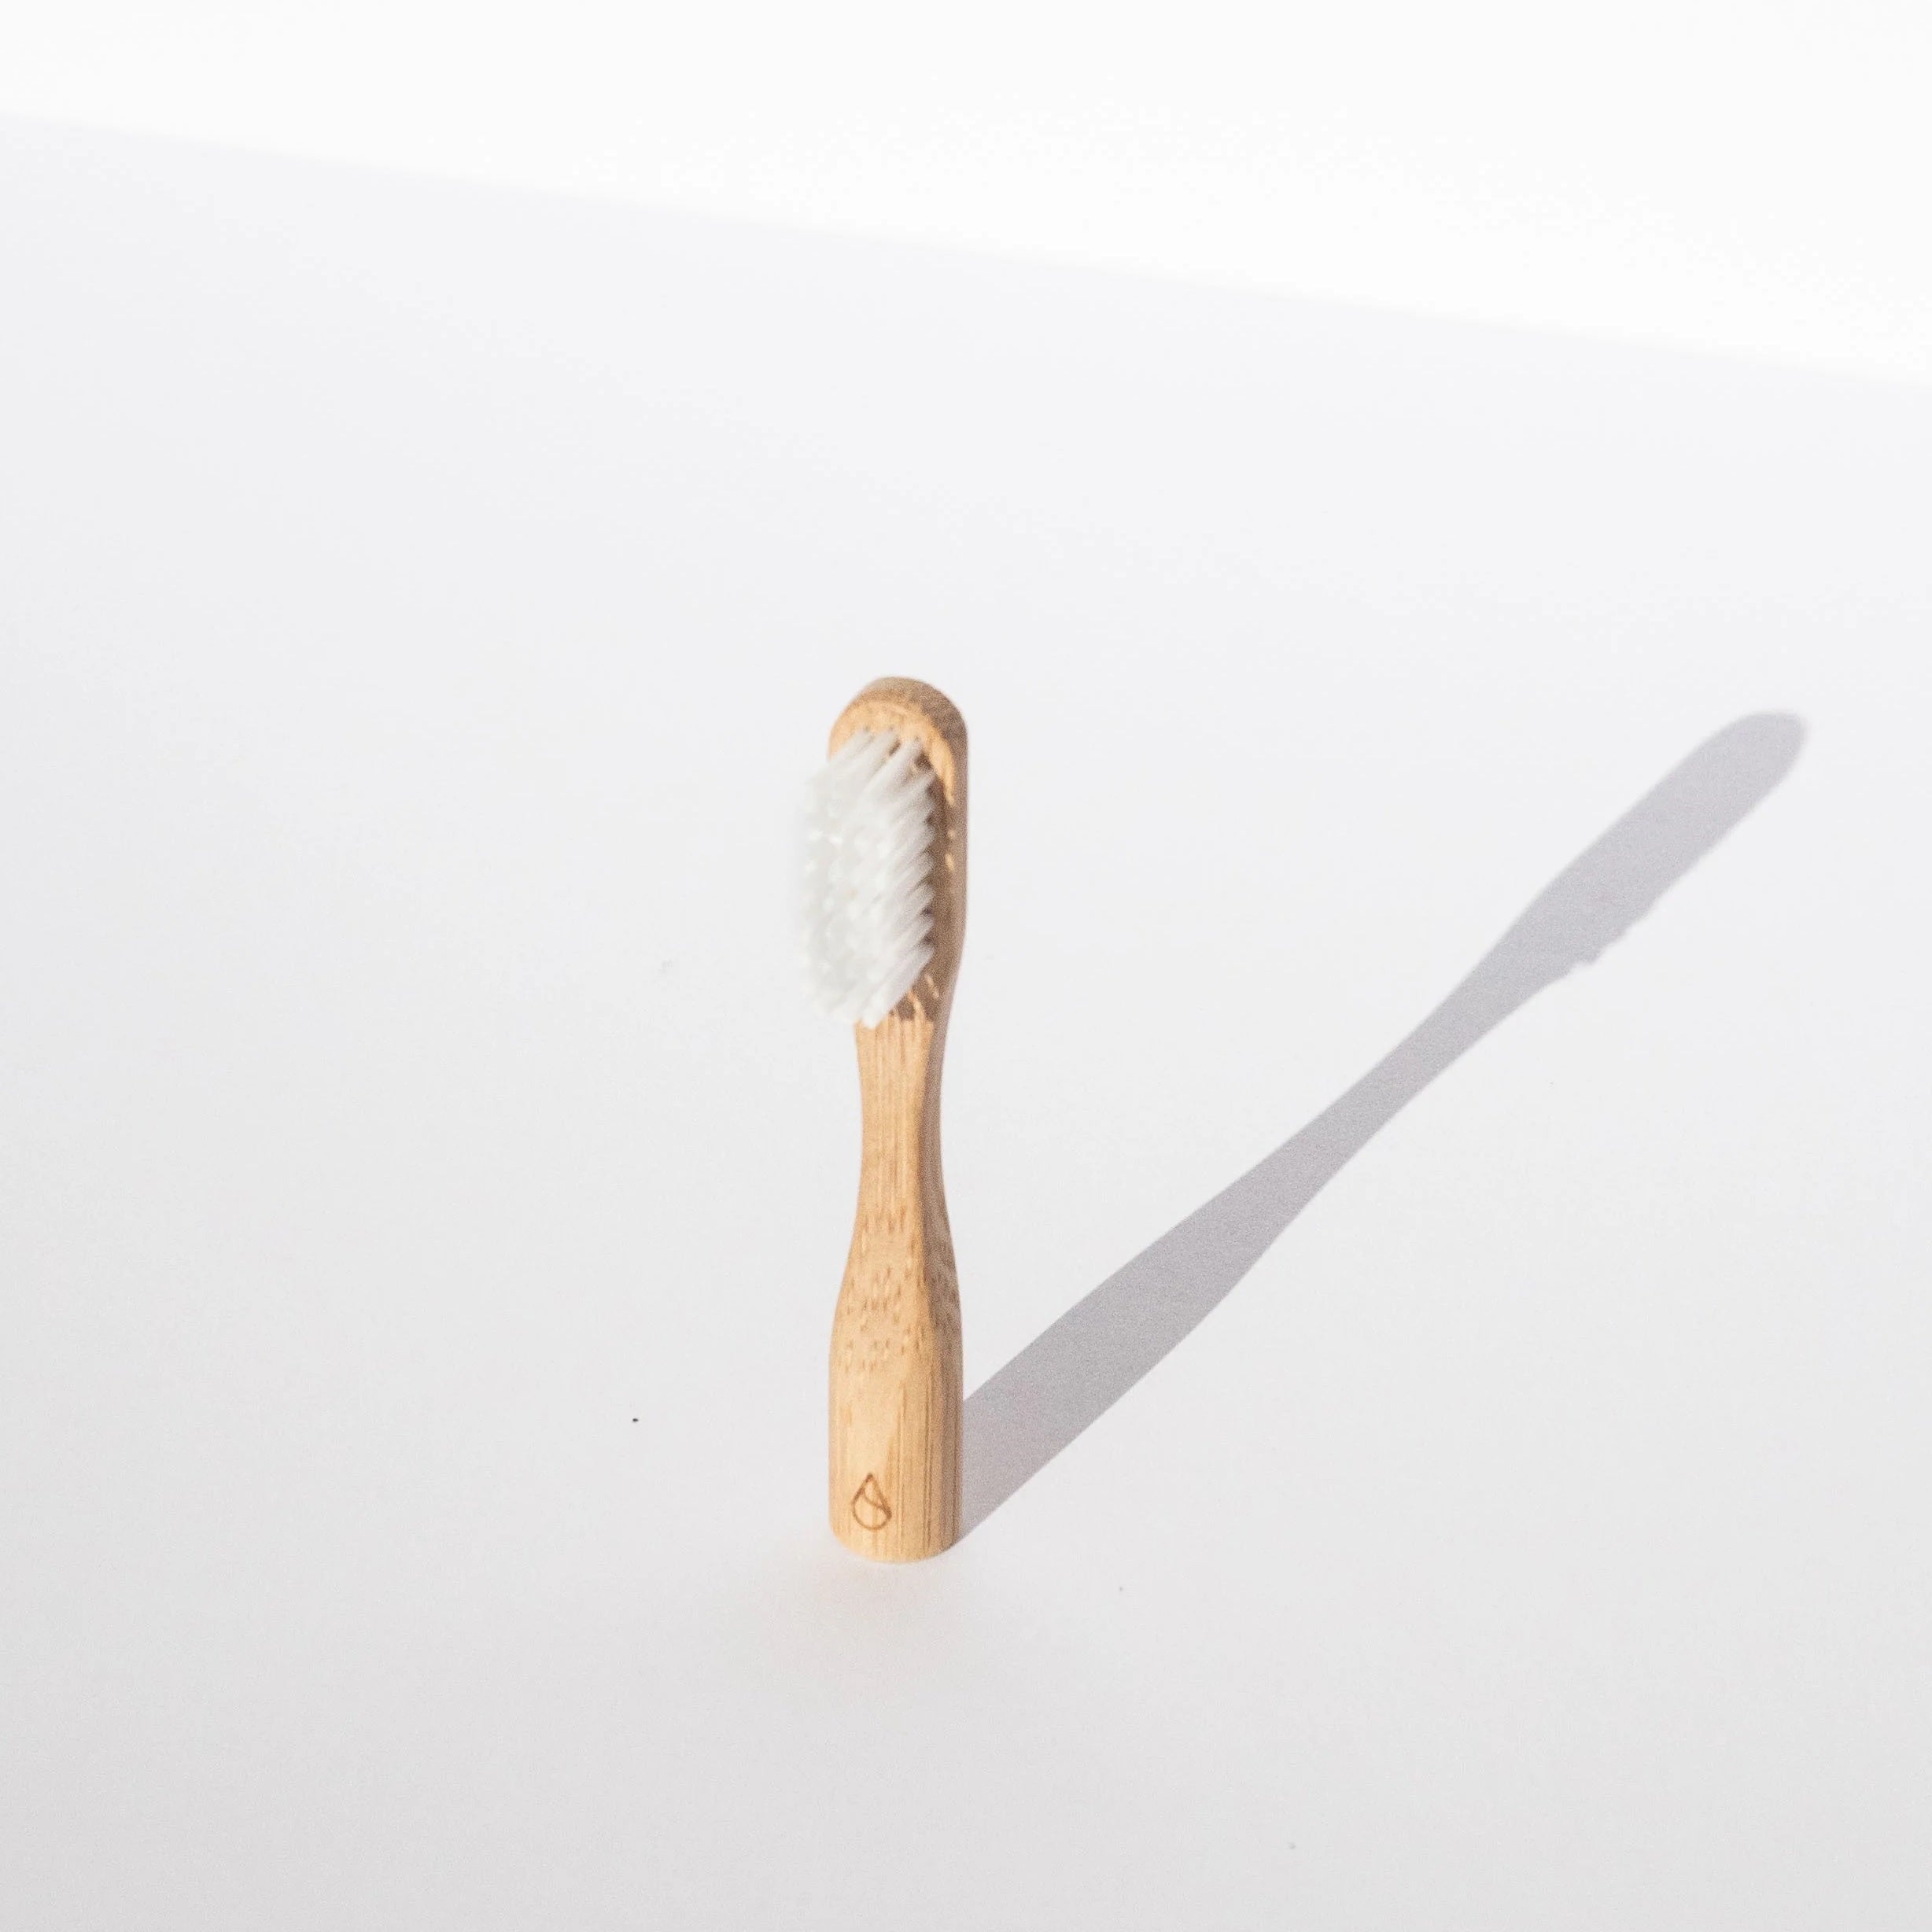 Asuvi Bamboo Toothbrush - M 環保竹牙刷 - 硬毛